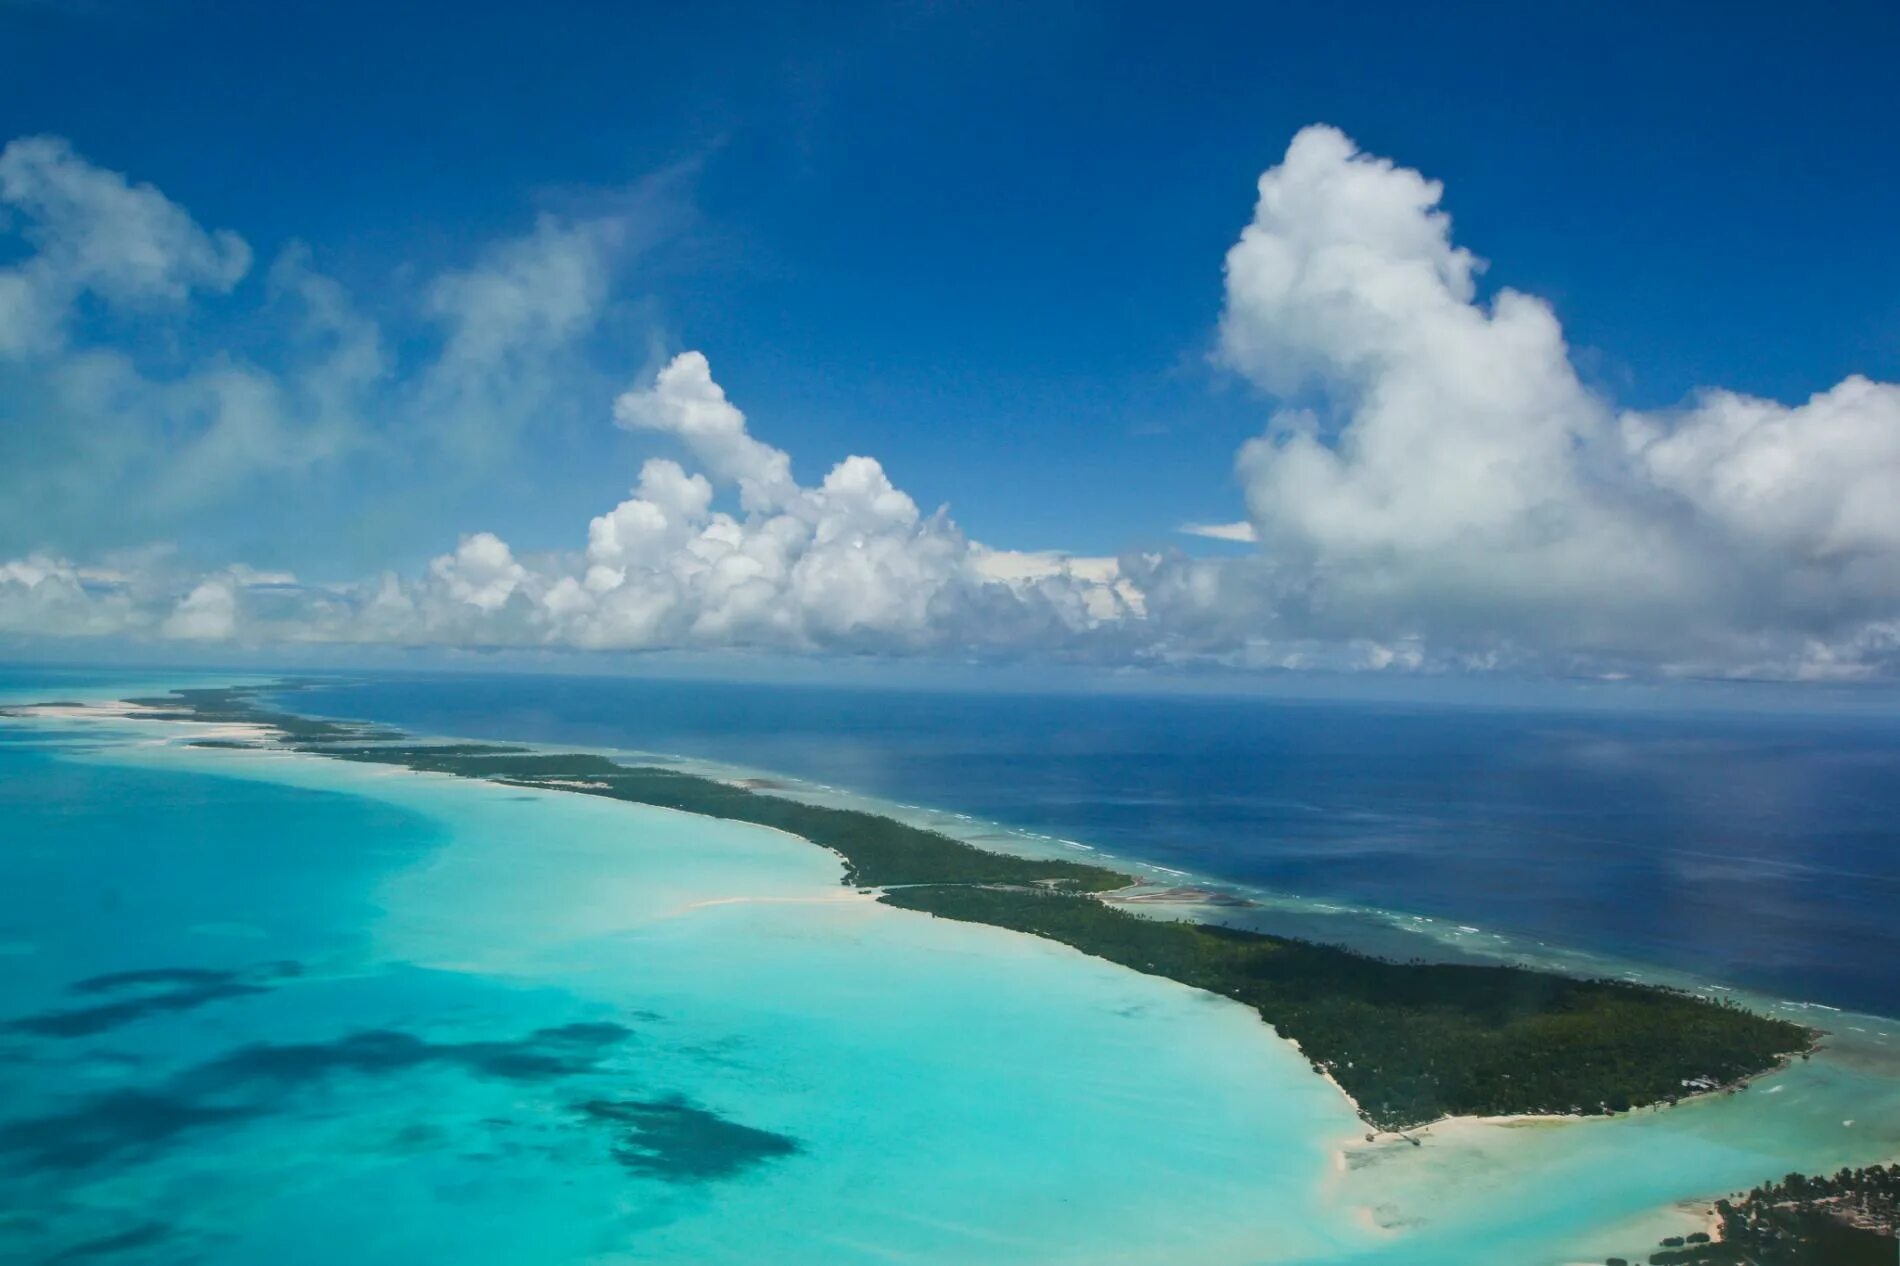 Индийский океан острова страны. Атолл Кирибати. Кирибати остров Тарава. Атолл в тихом океане. Острова Гилберта, Кирибати.